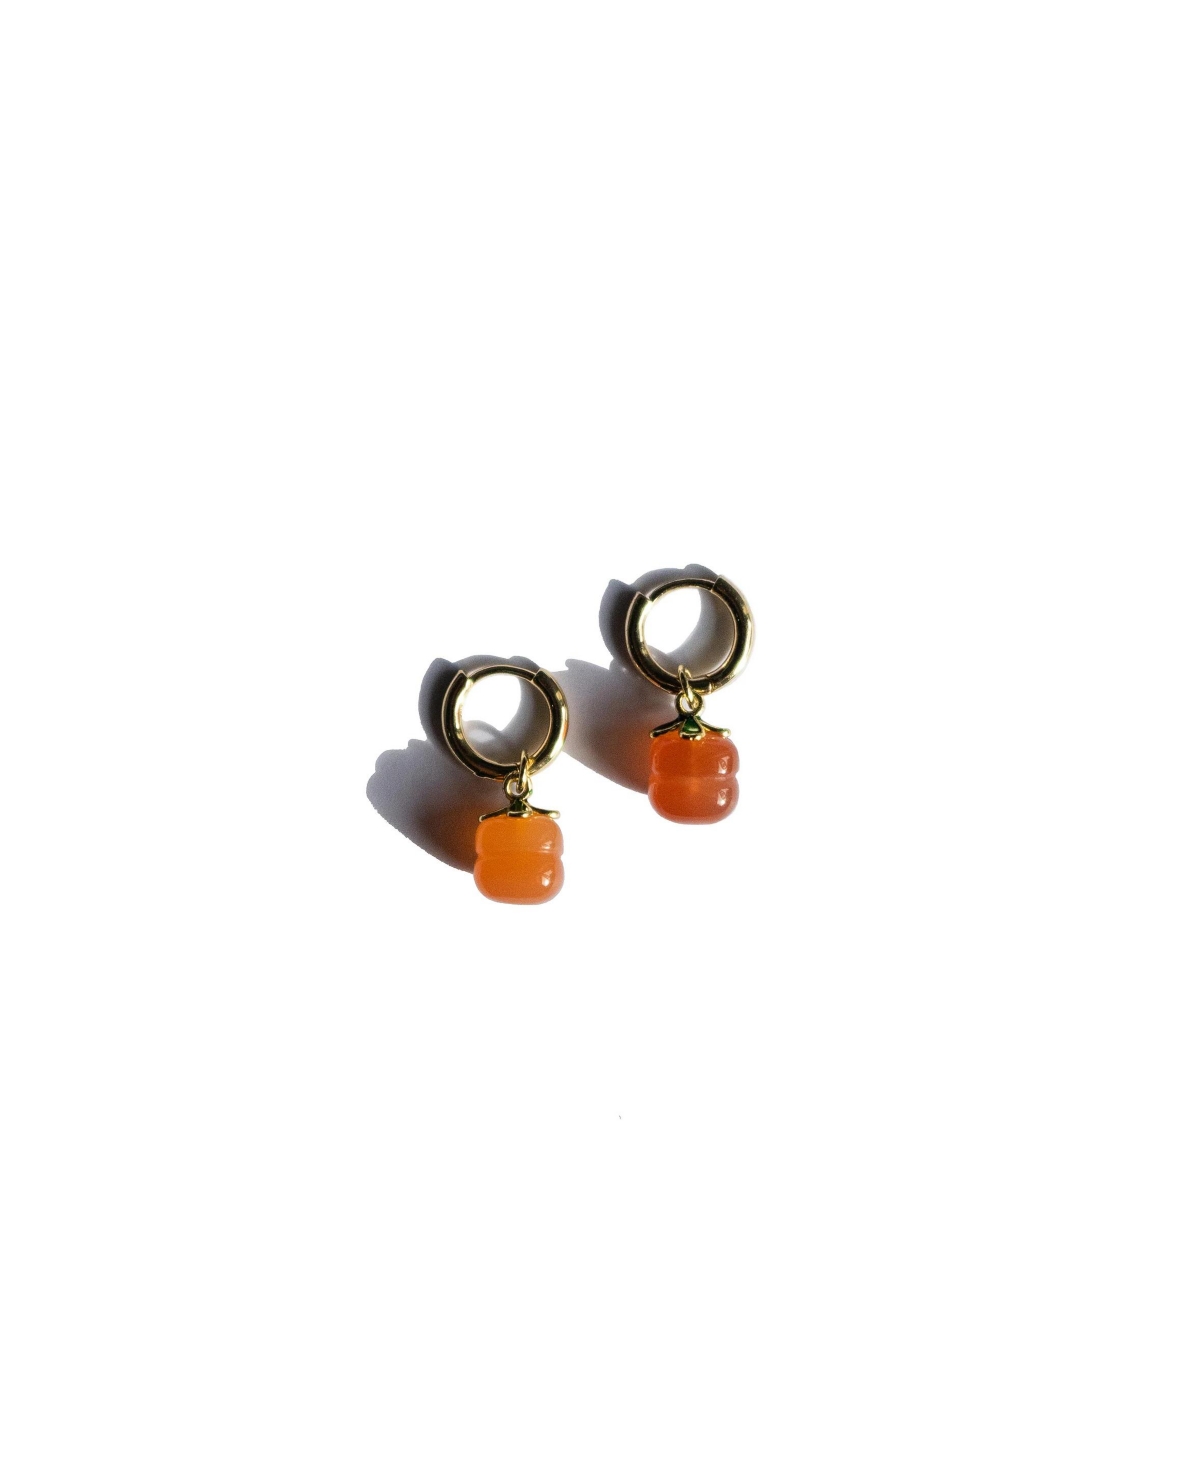 Harvest - Persimmon Jade stone charm earrings - Pink